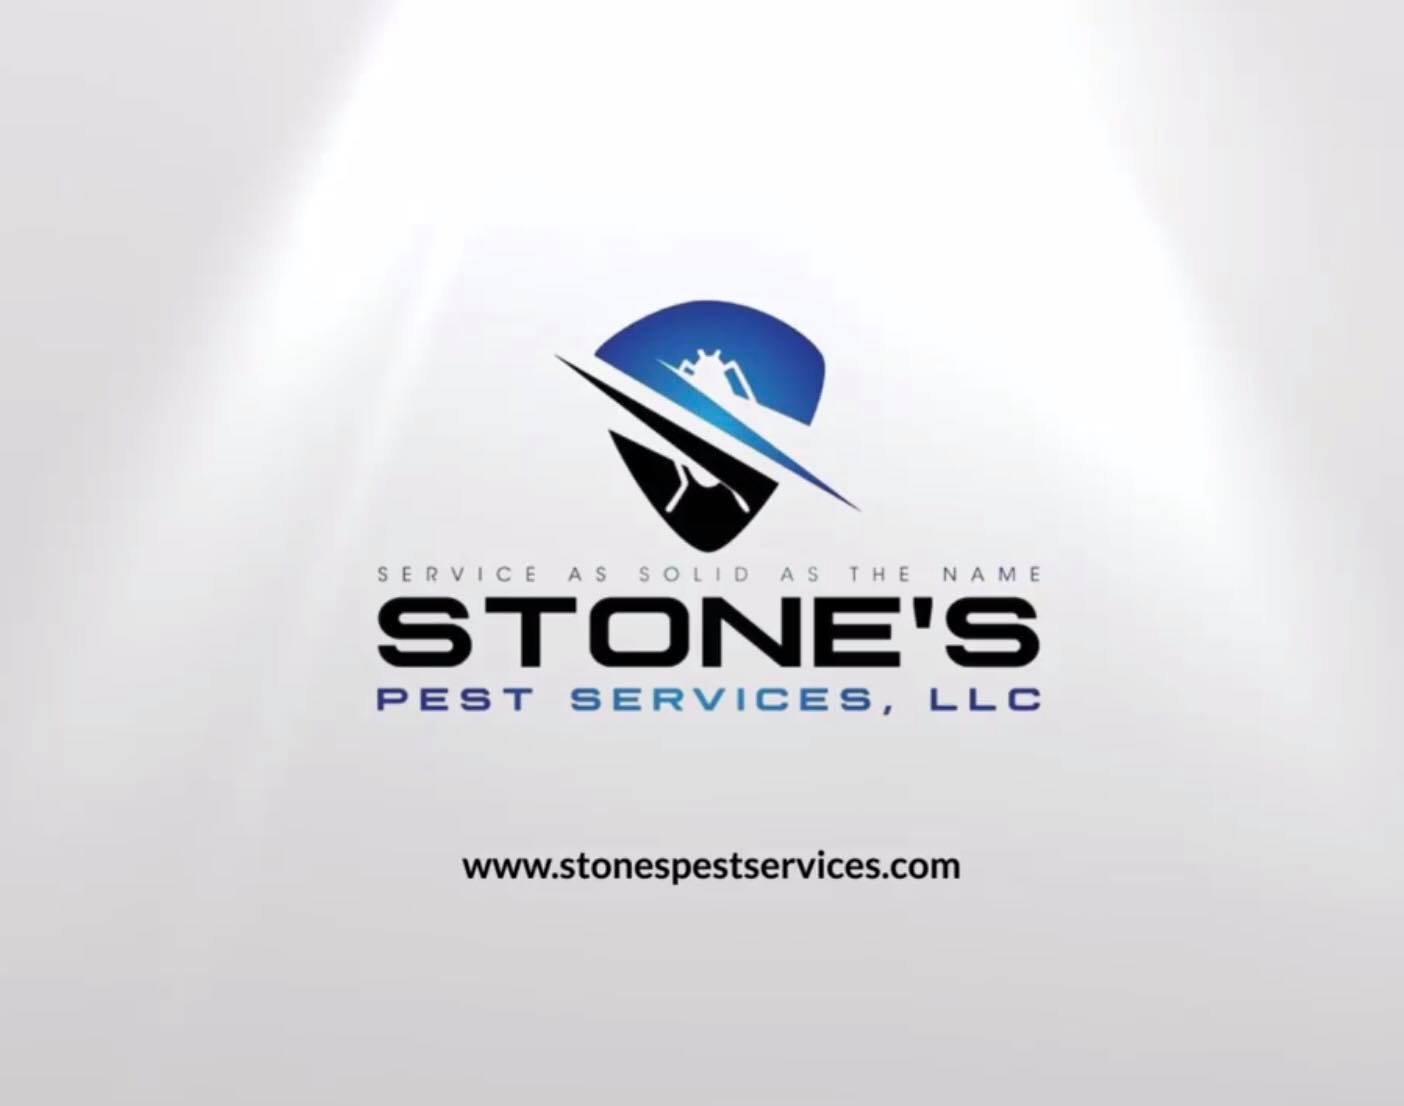 Stone's Pest Services, LLC